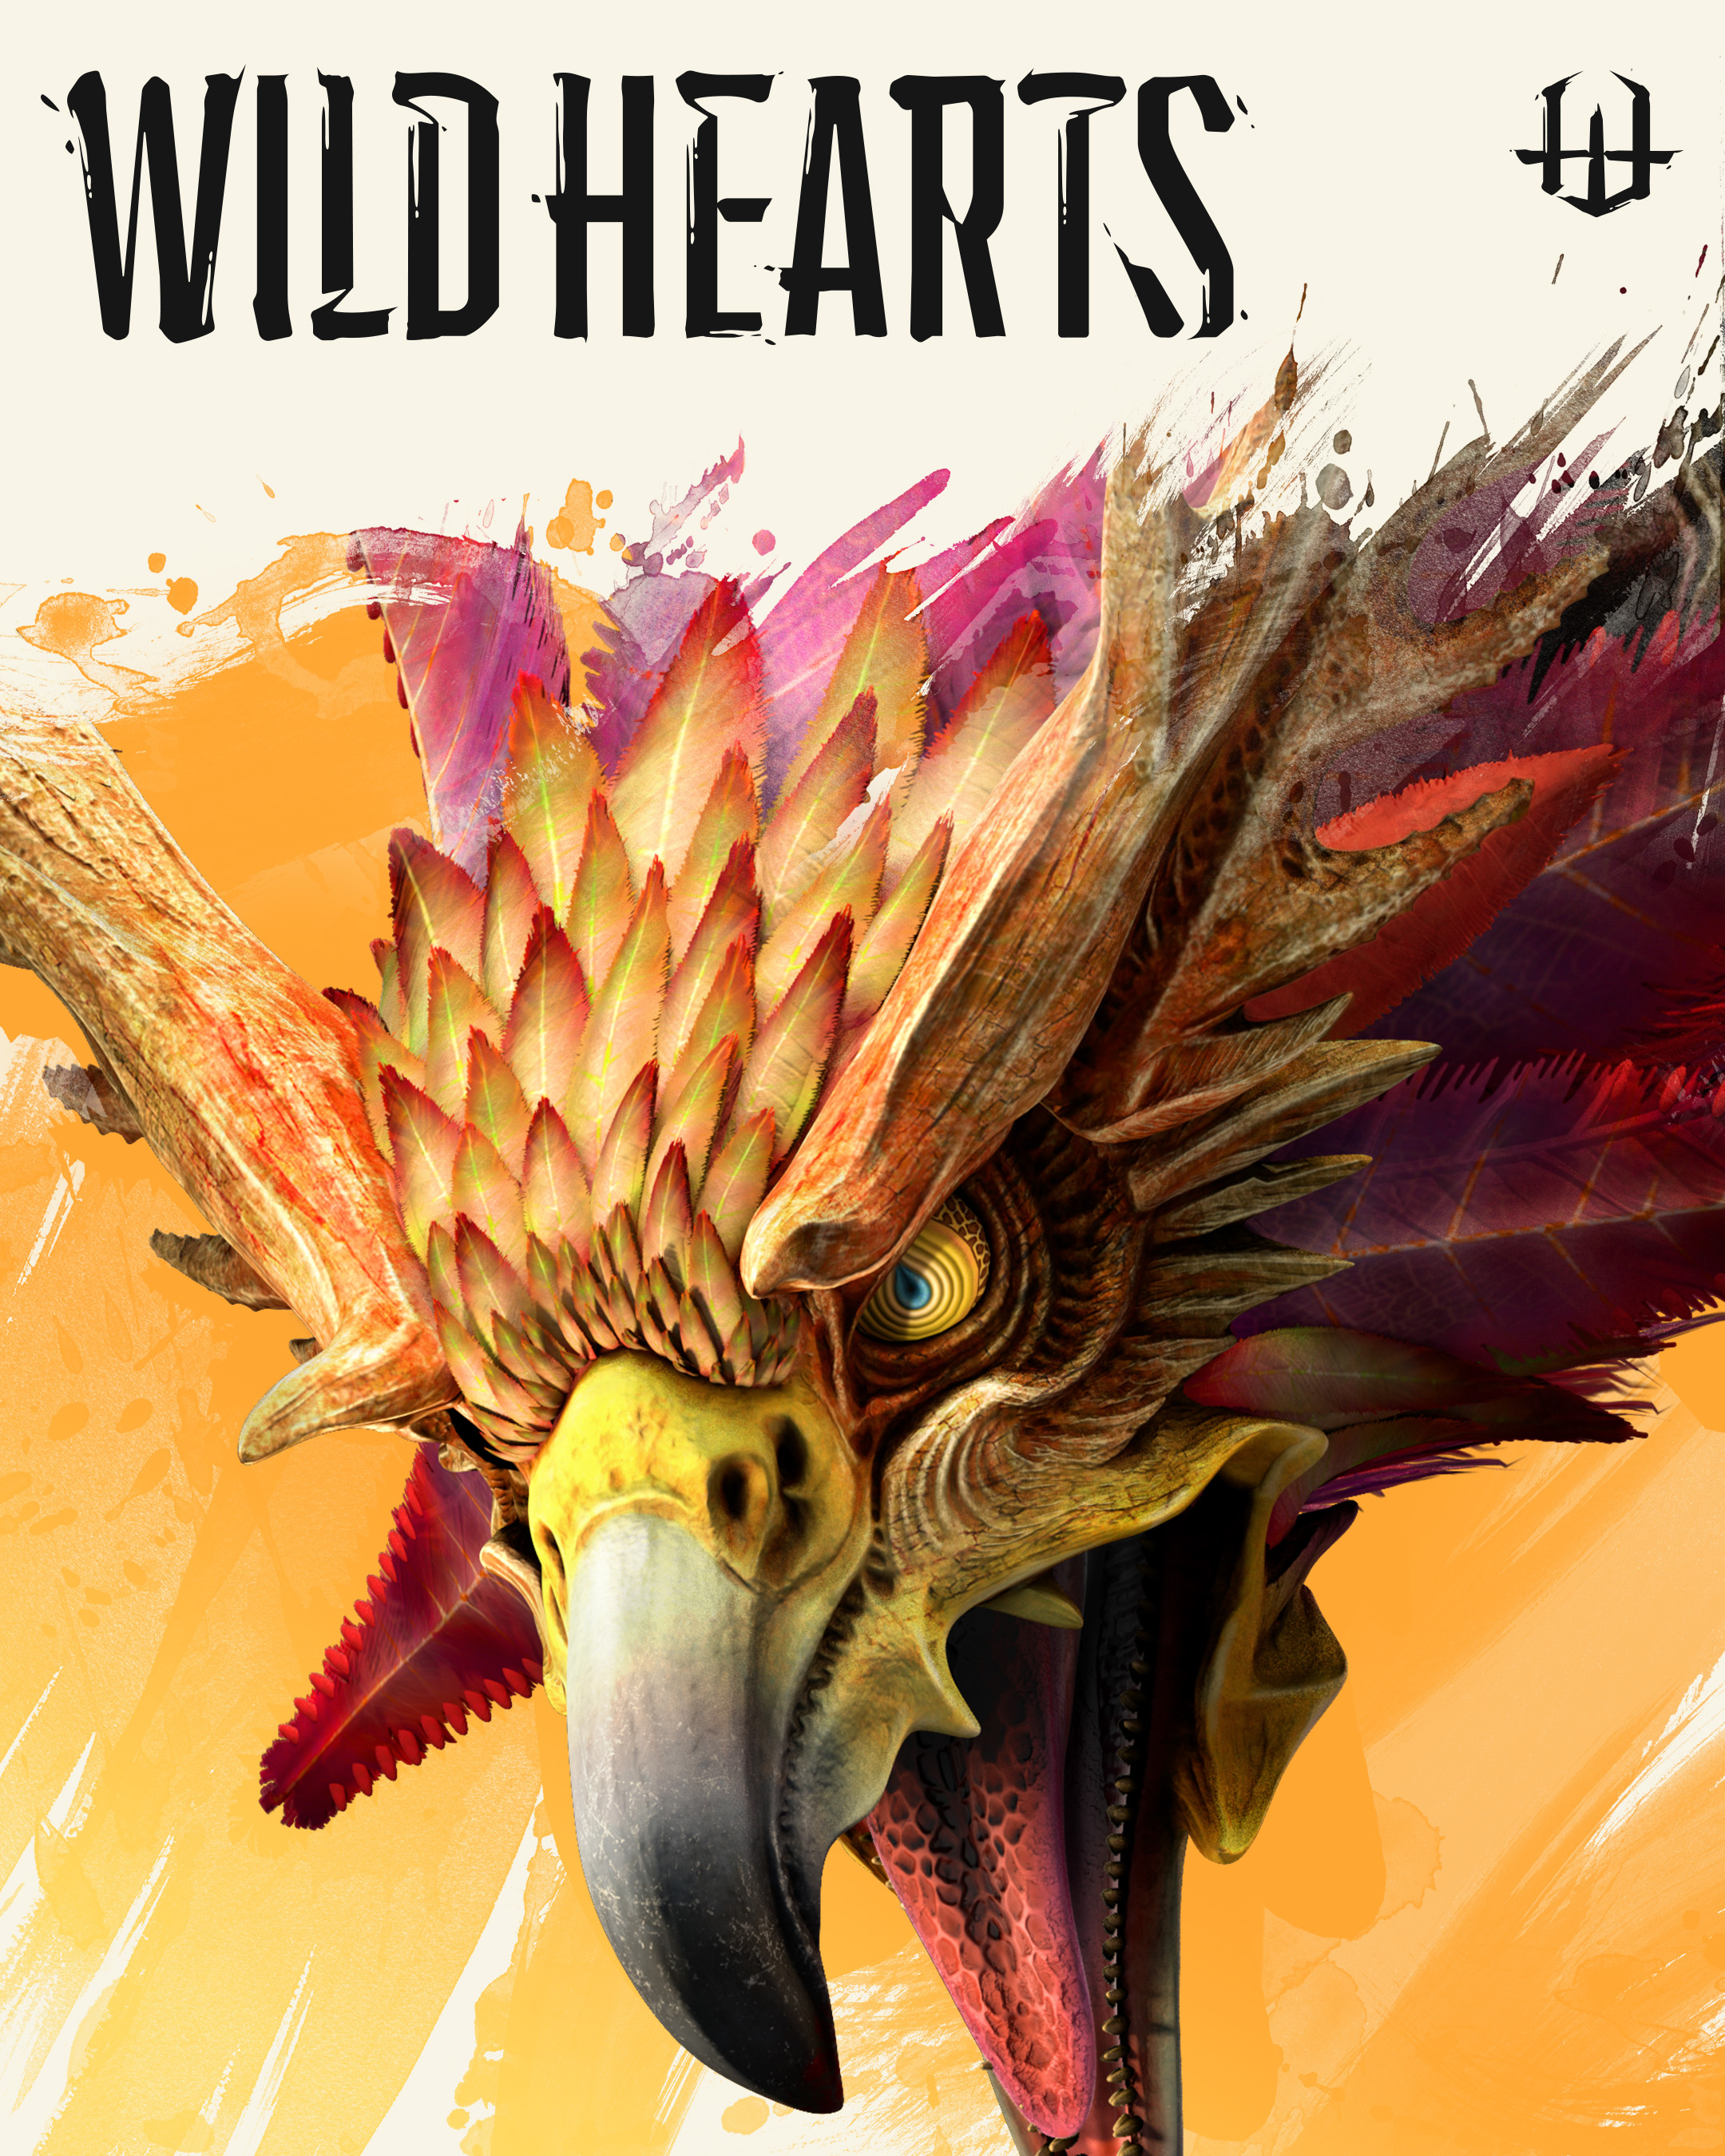 WILD HEARTS (@playWildHearts) / X